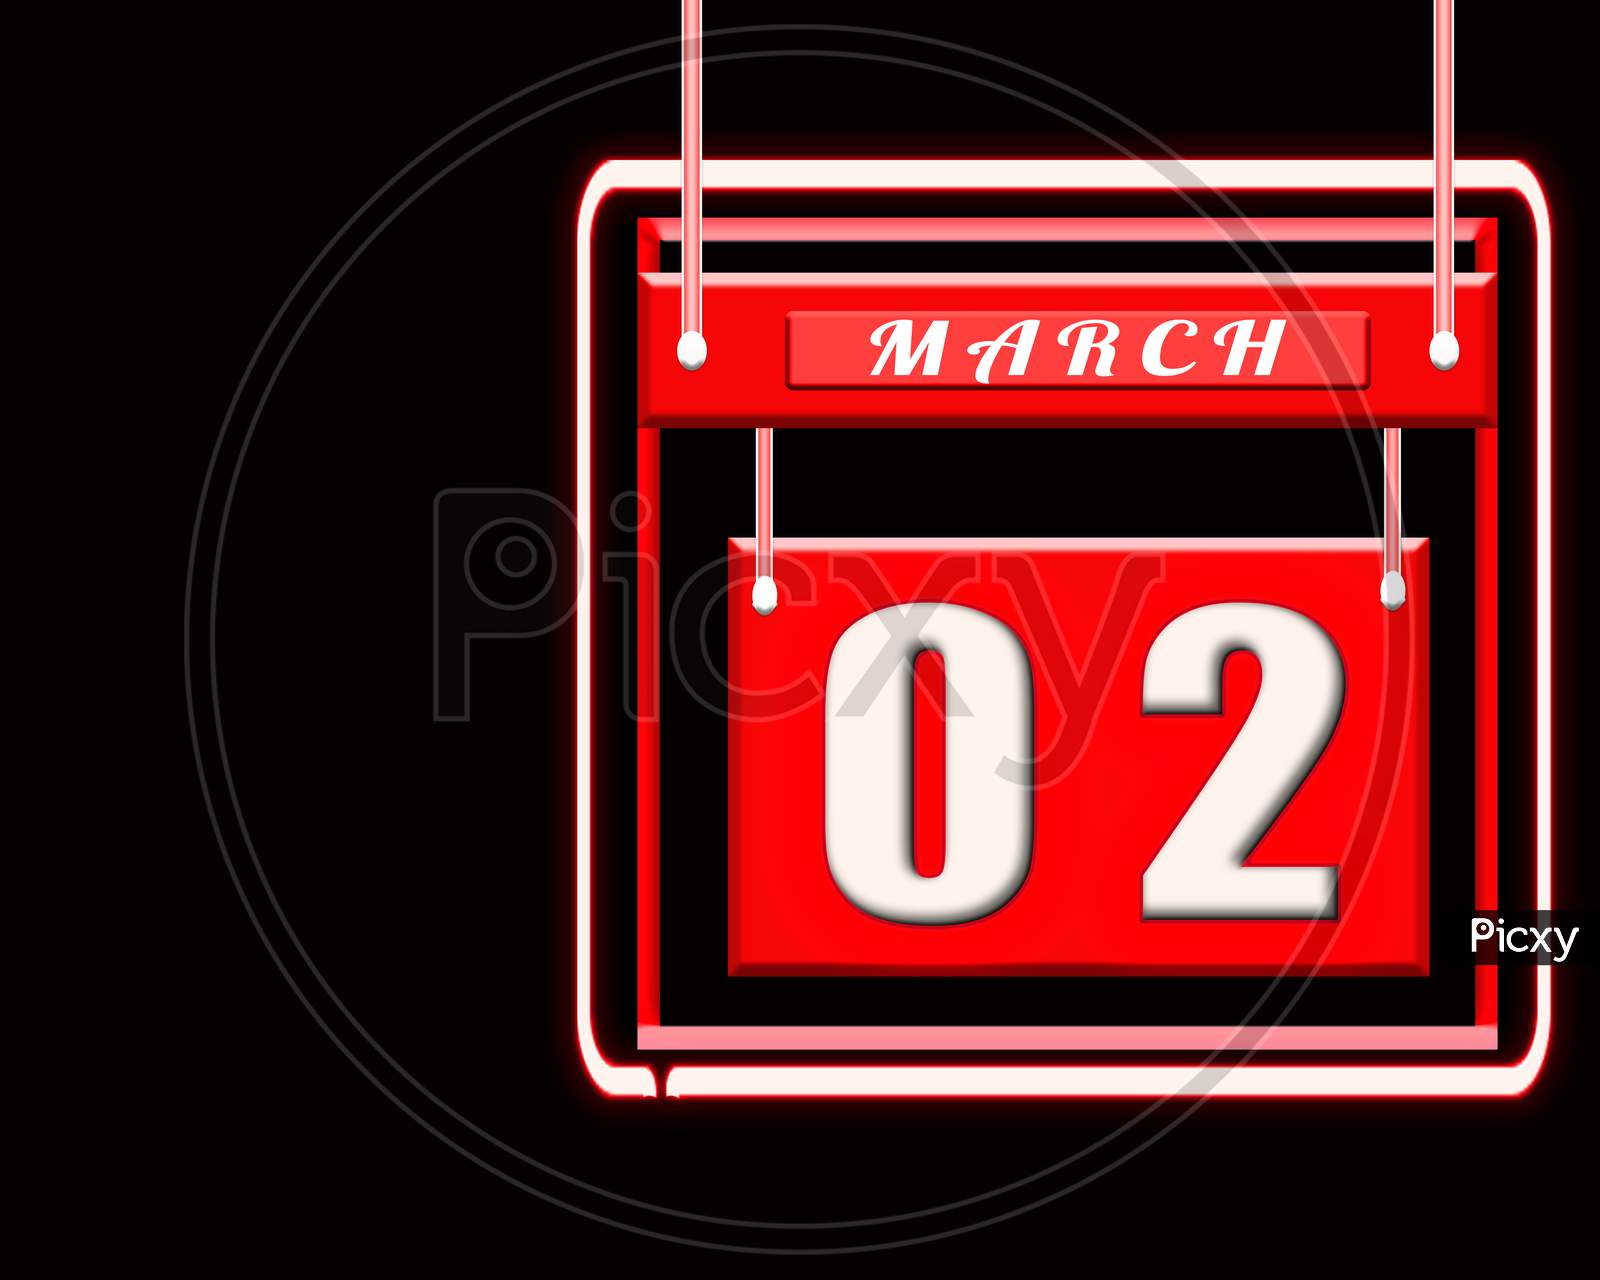 2 March, Red Calendar On Black Backgrand